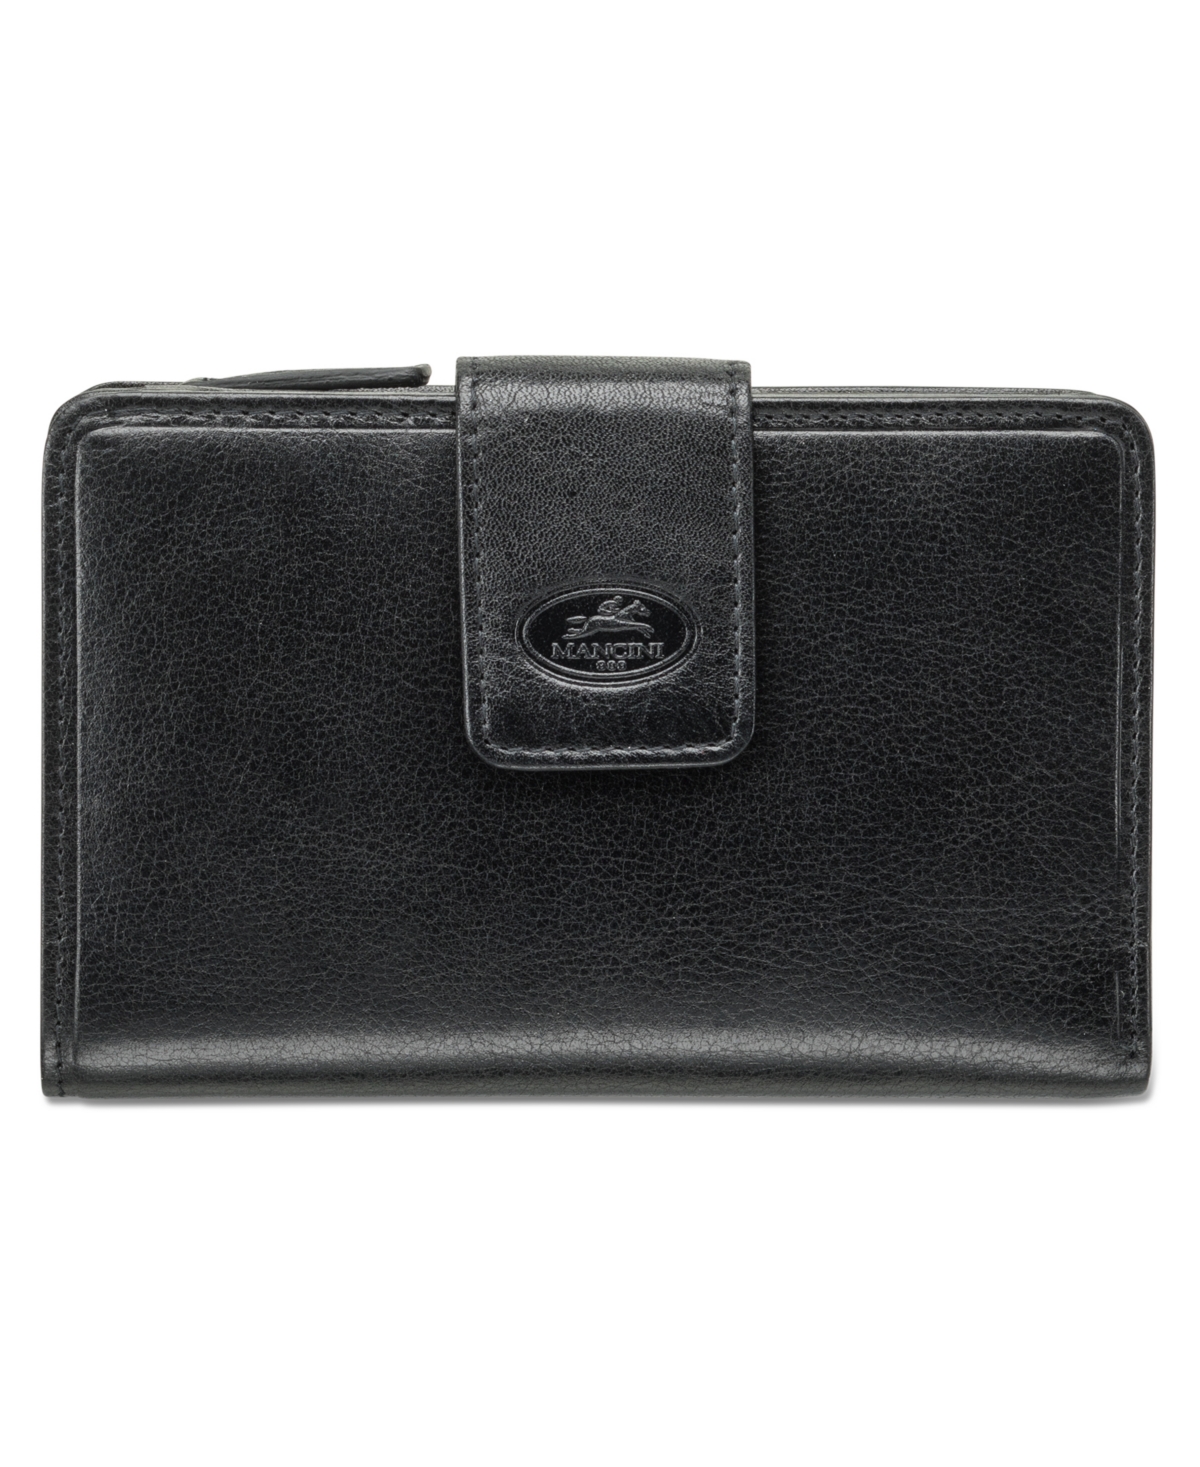 Equestrian-2 Collection Rfid Secure Medium Clutch Wallet - Black